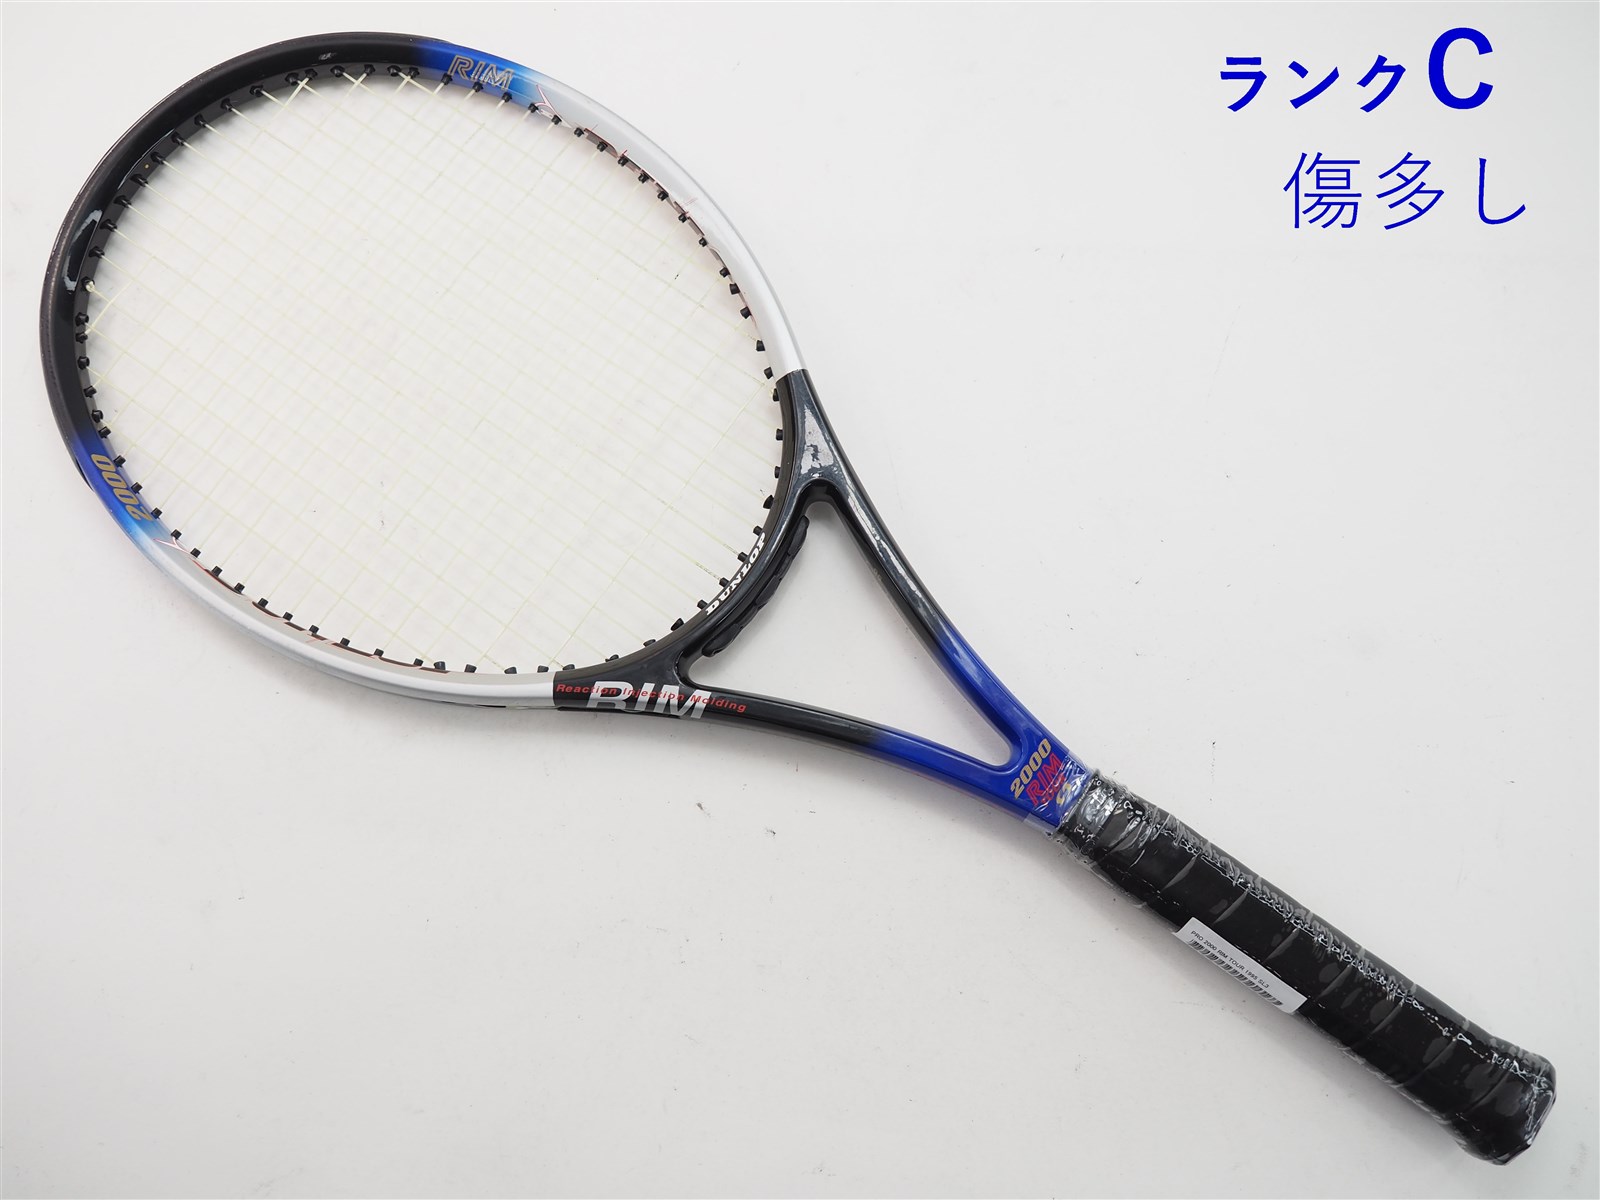 Prince TOUR95 310 G2 プリンス ツアー 硬式テニスラケット - テニス